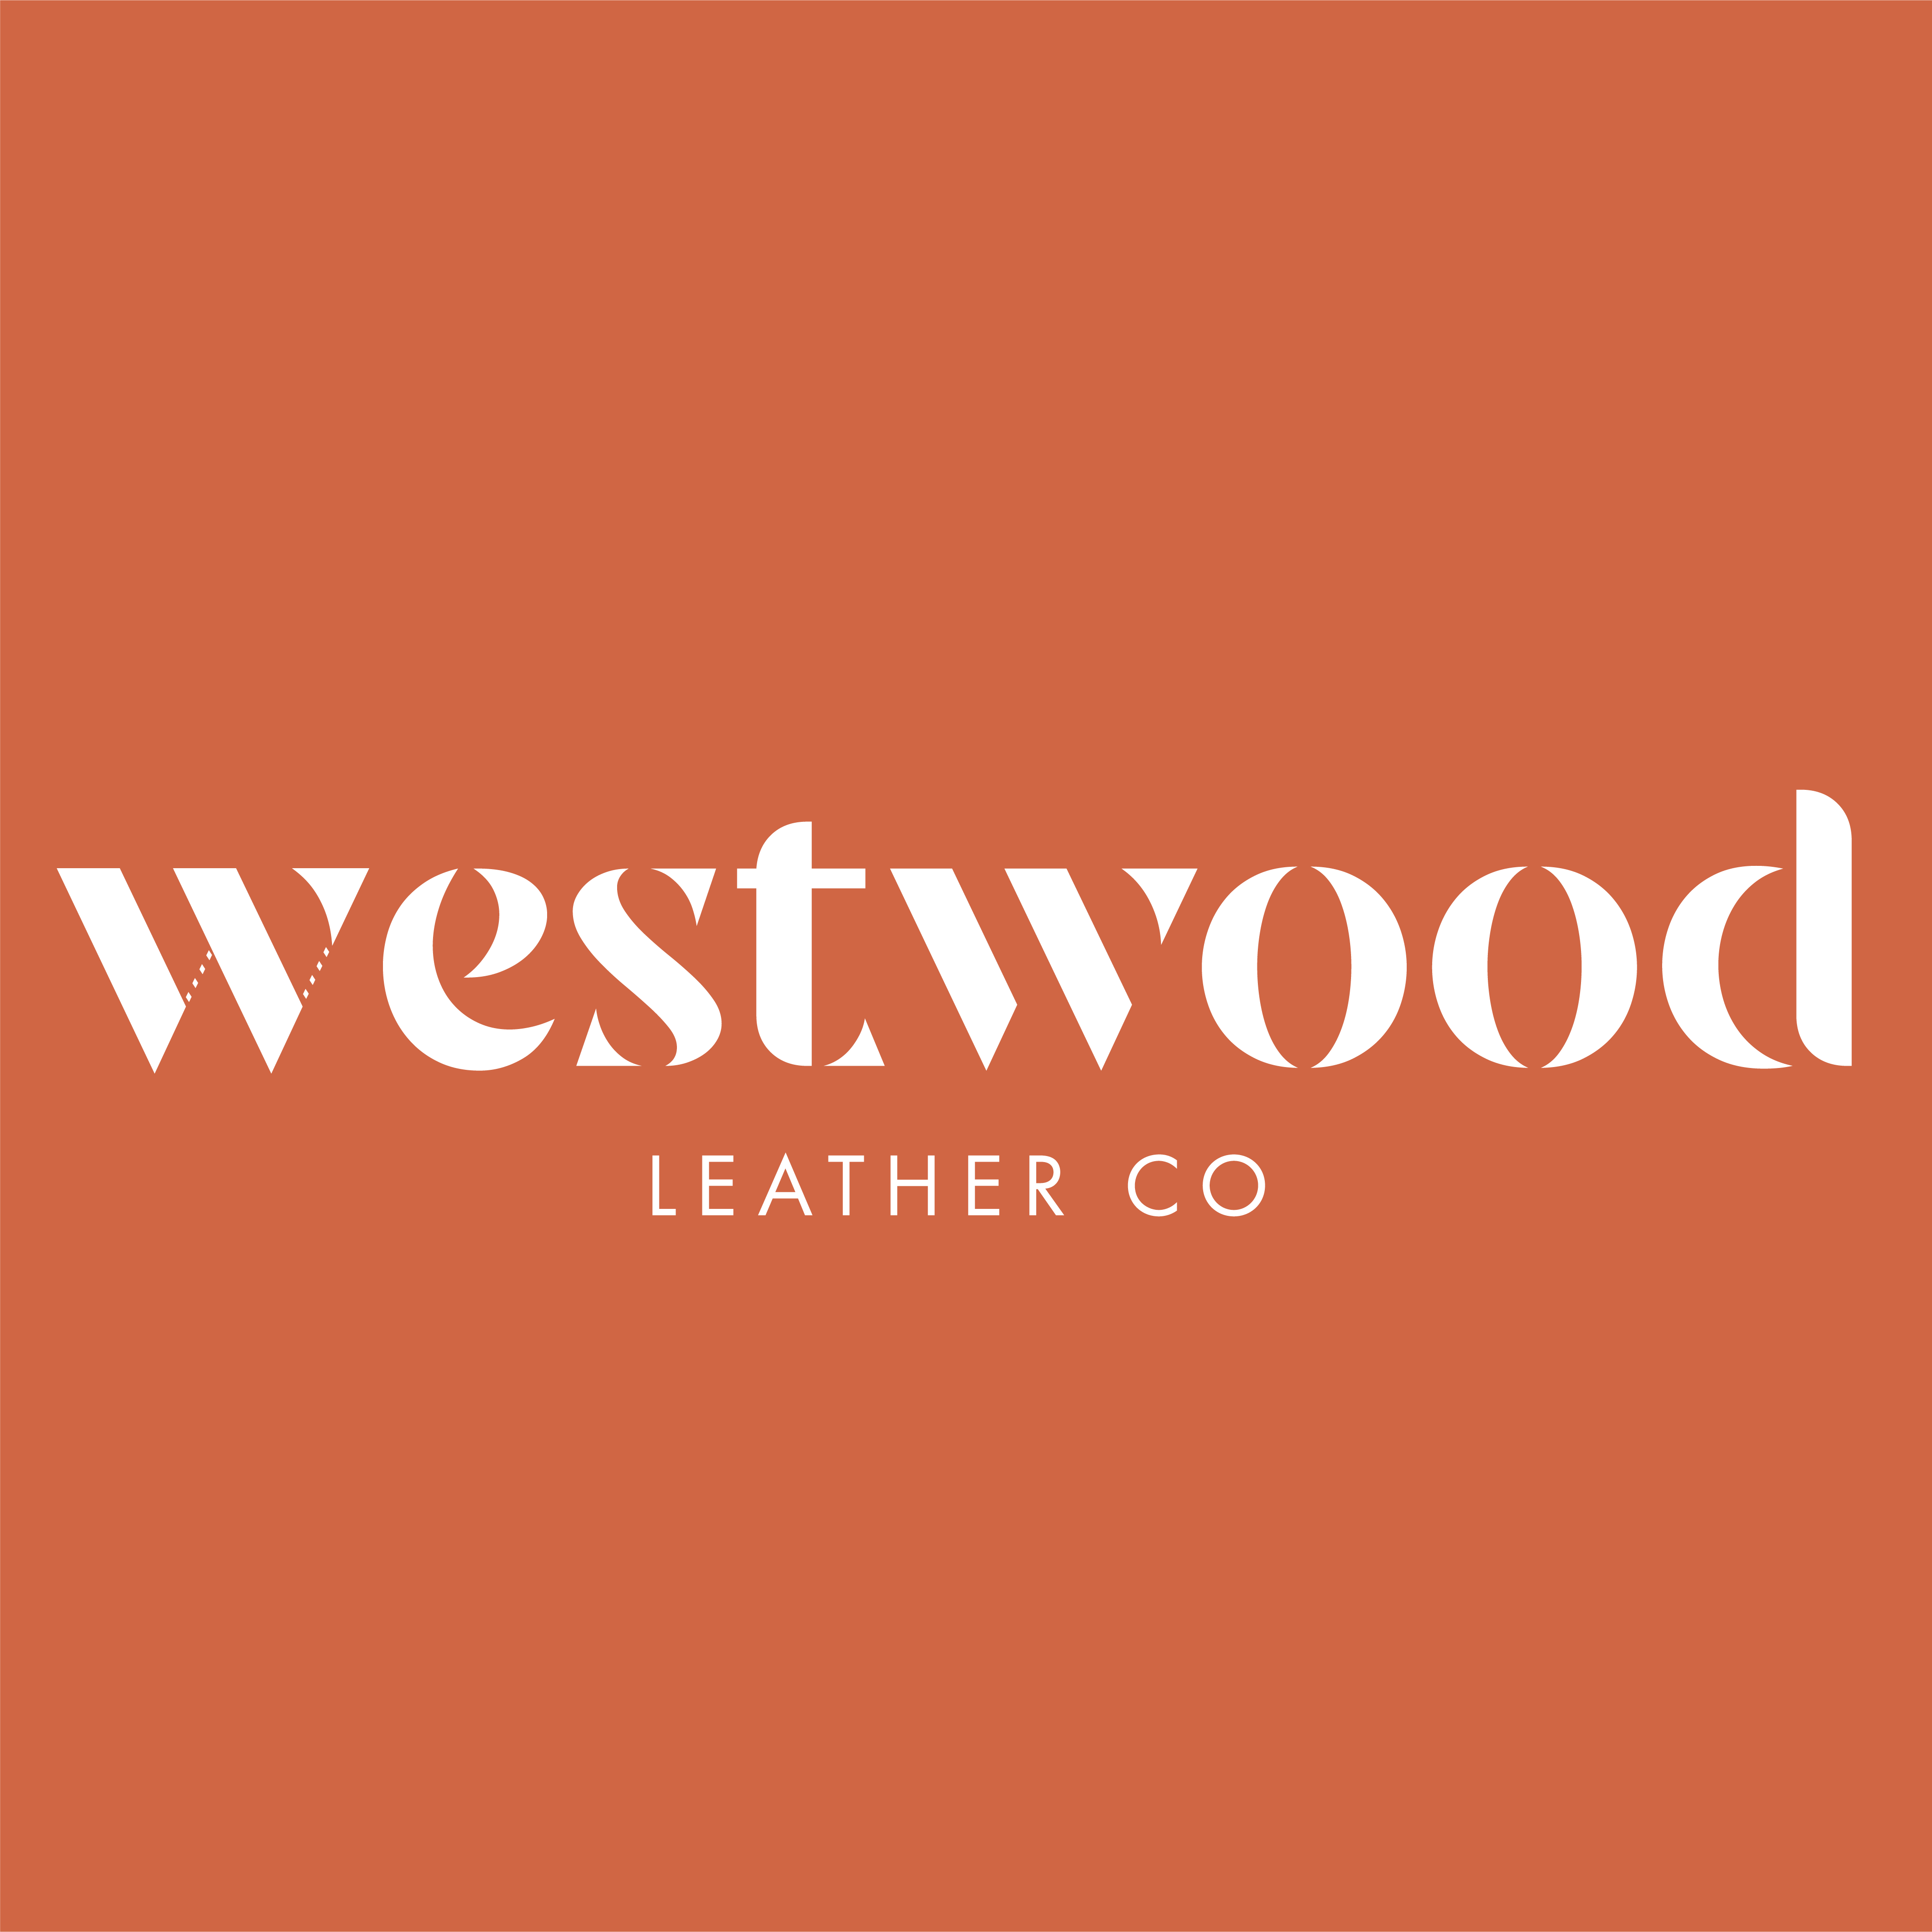 Westwood Leather Co